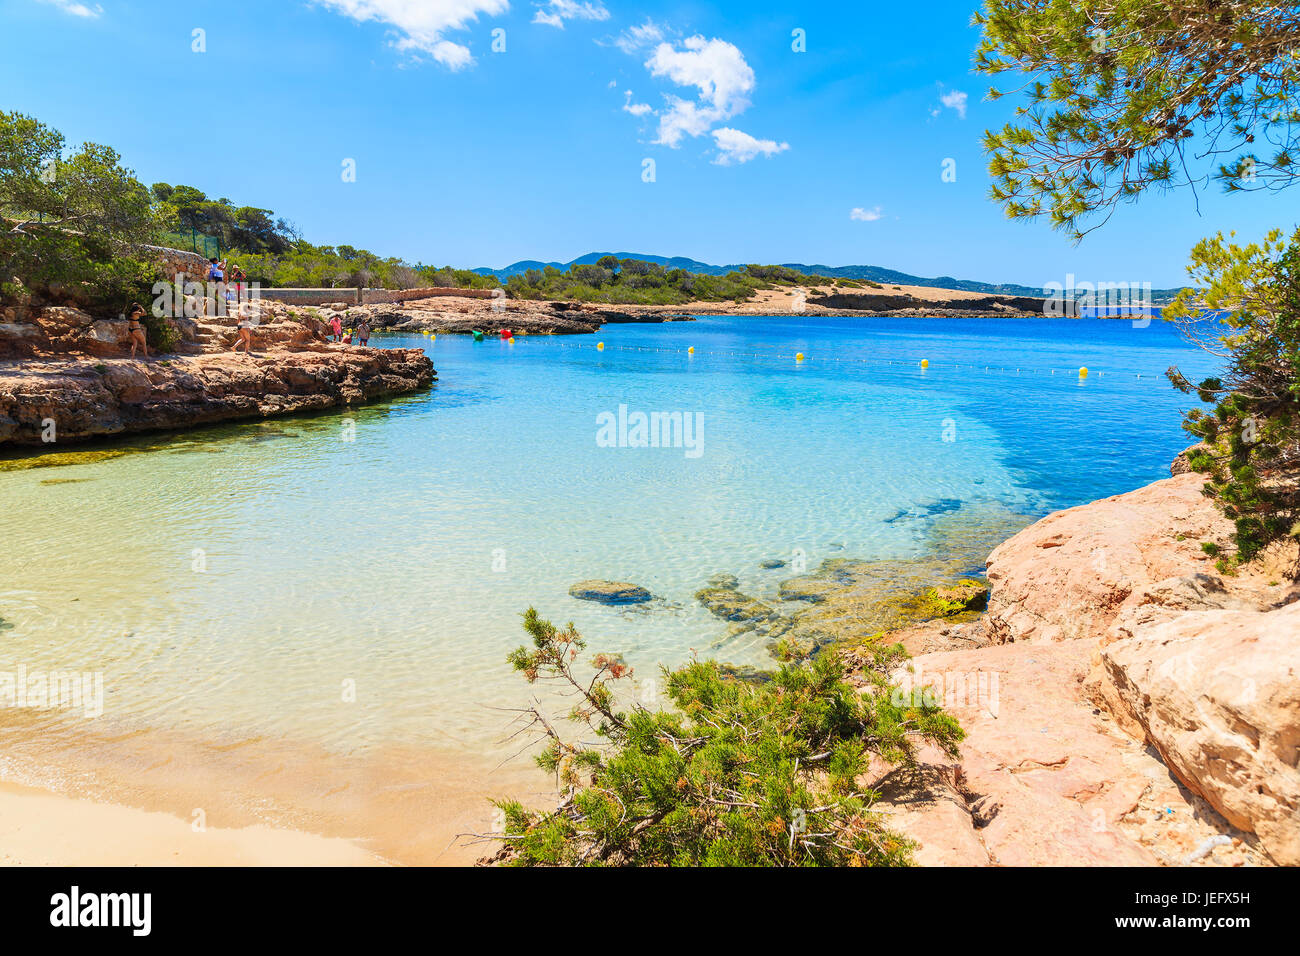 View of beautiful Cala Gracioneta beach, Ibiza island, Spain Stock Photo